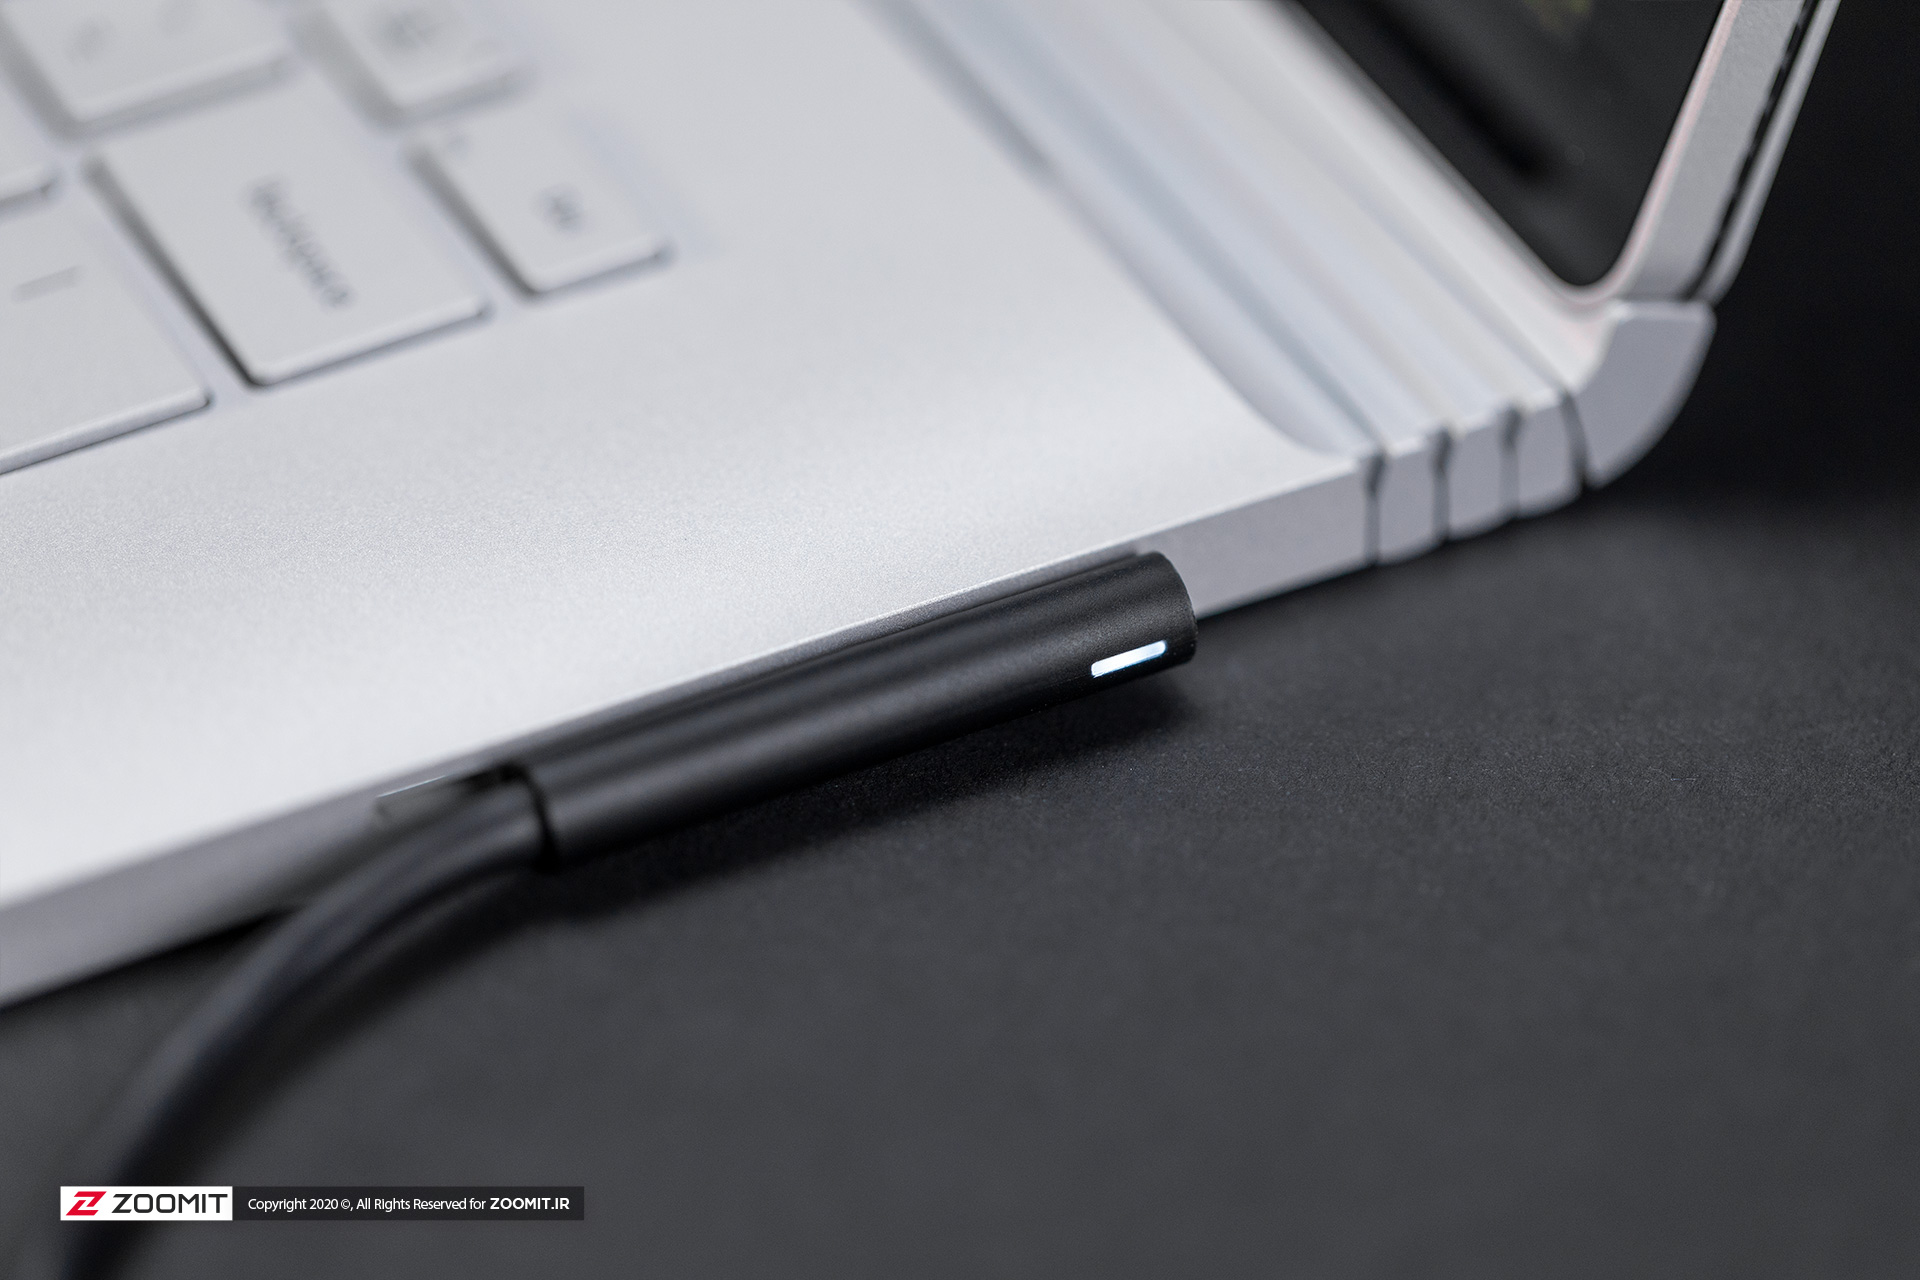 سرفیس بوک 3 مایکروسافت / Microsoft Surface Book 3 در حال شارژ با سرفیس کانکت